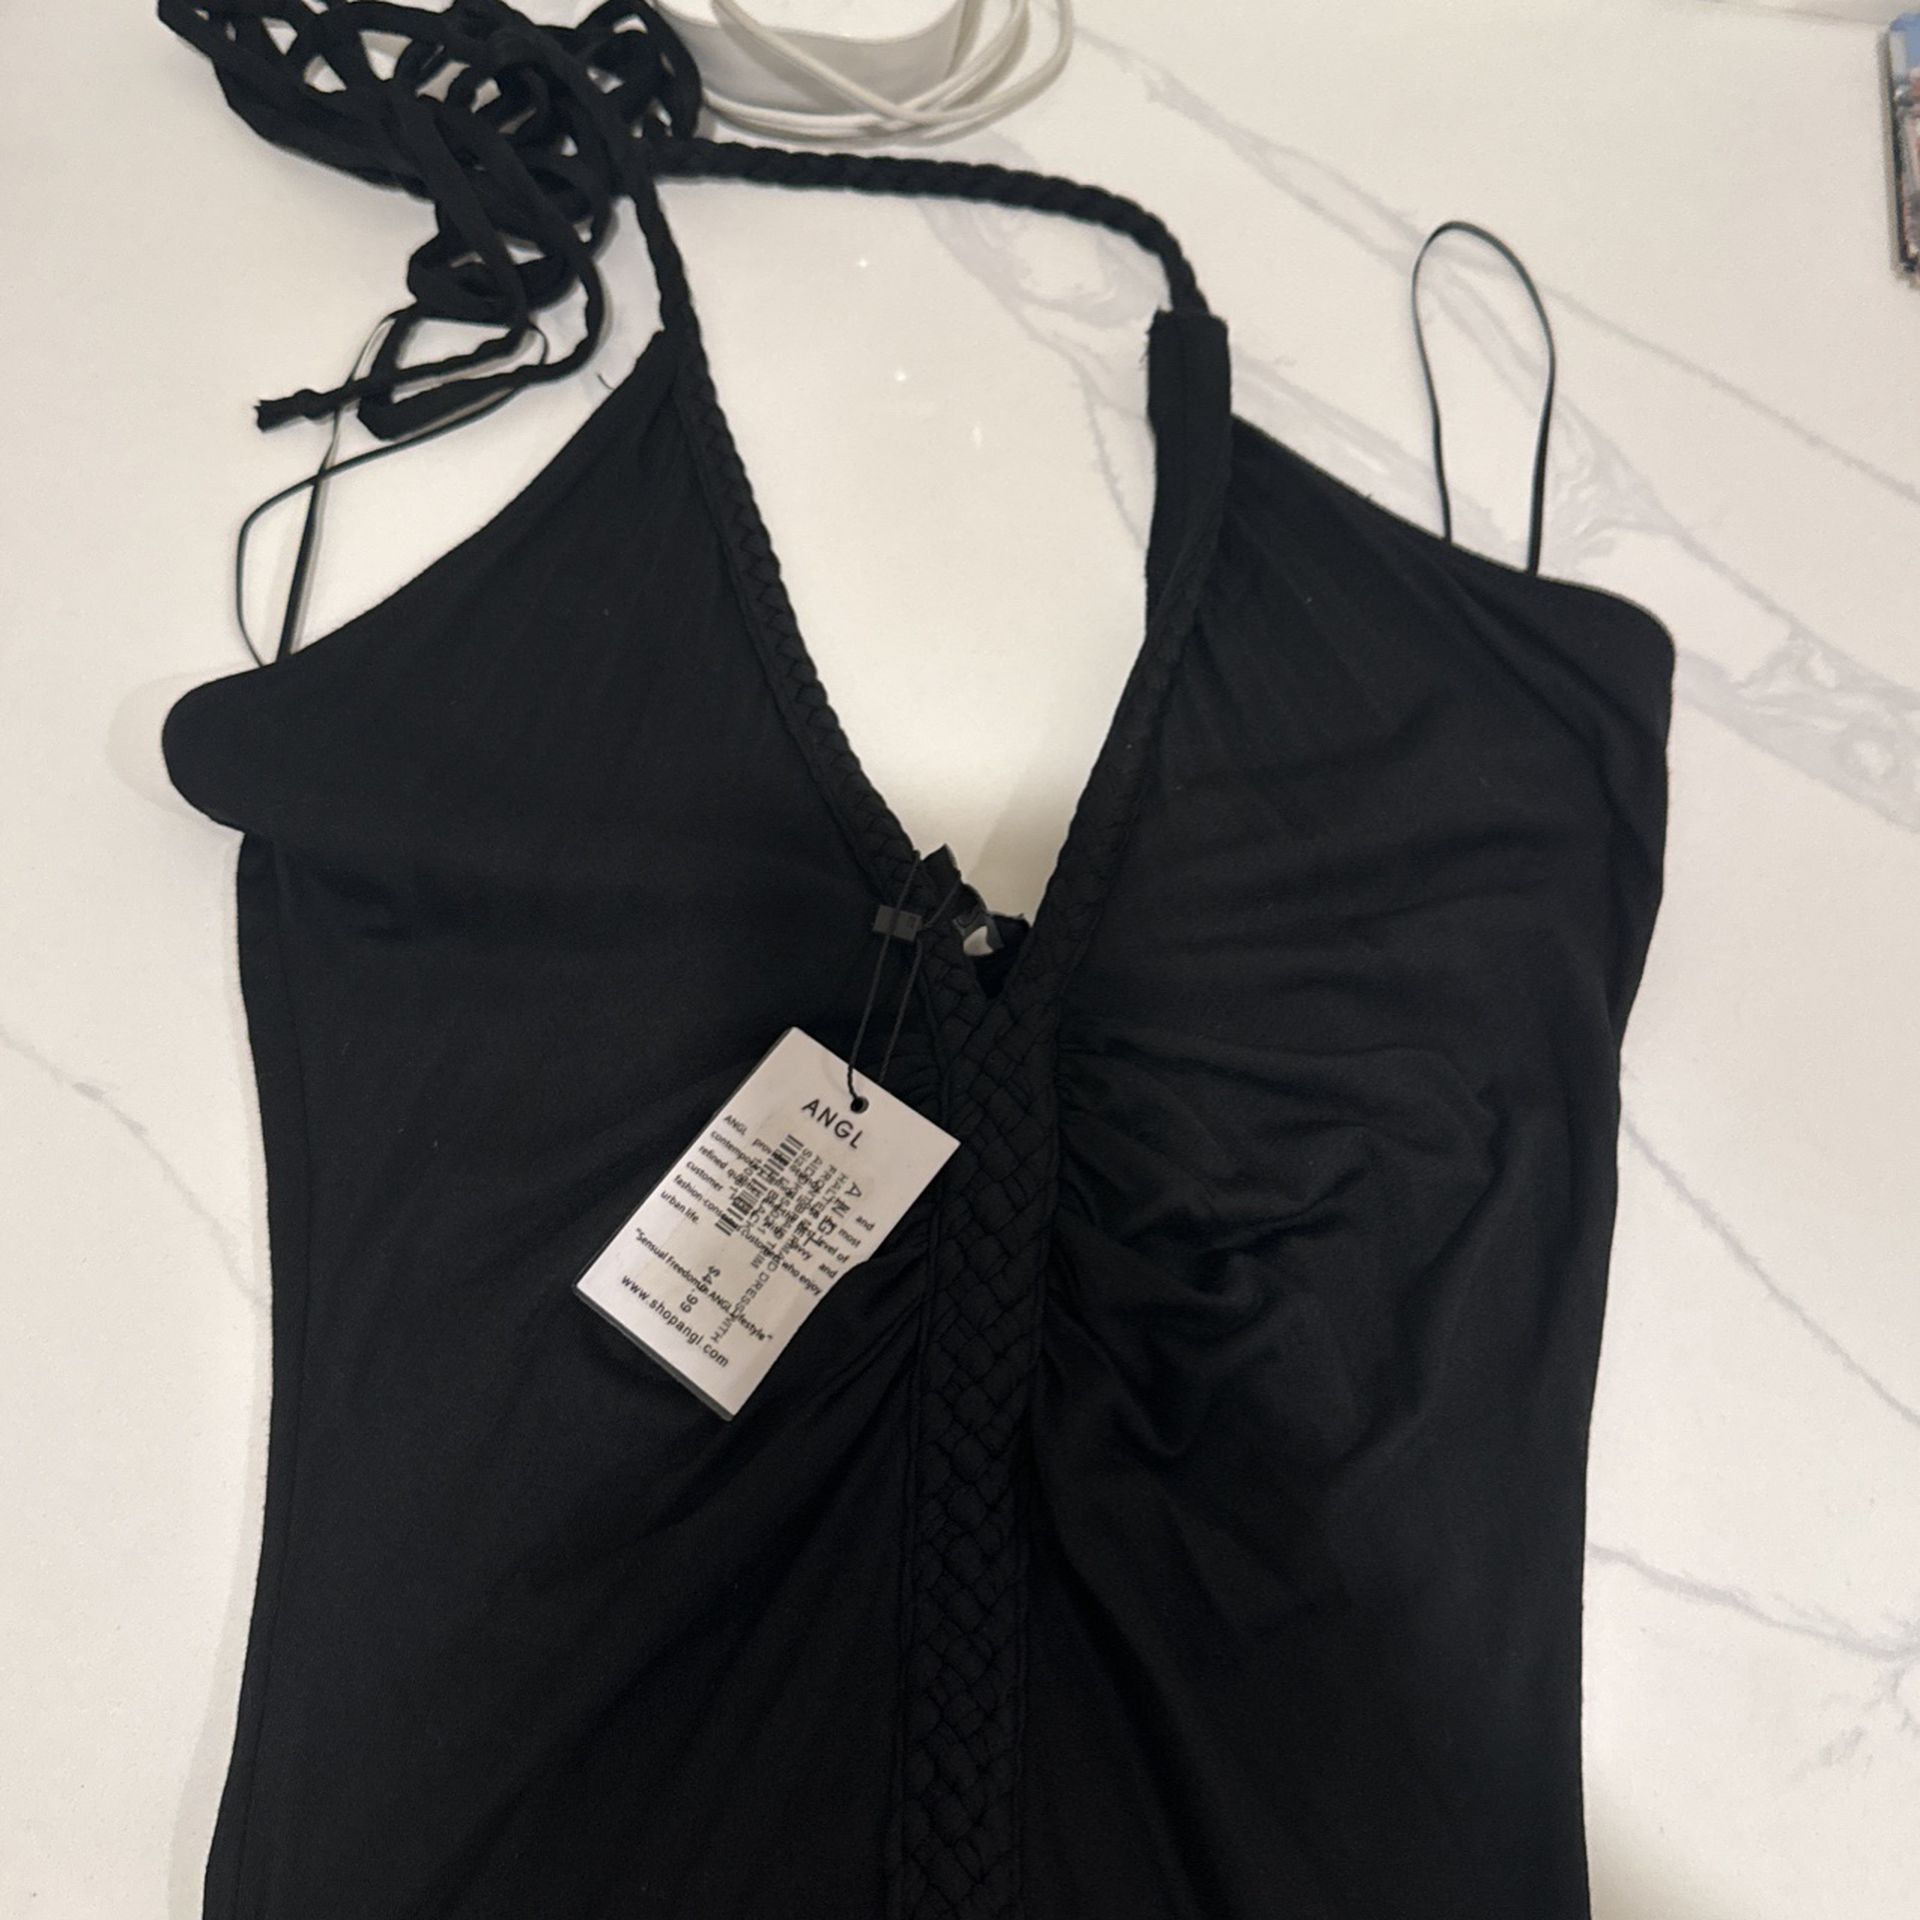 Black Summer Dress Halter Top Brand New Tight Fitting